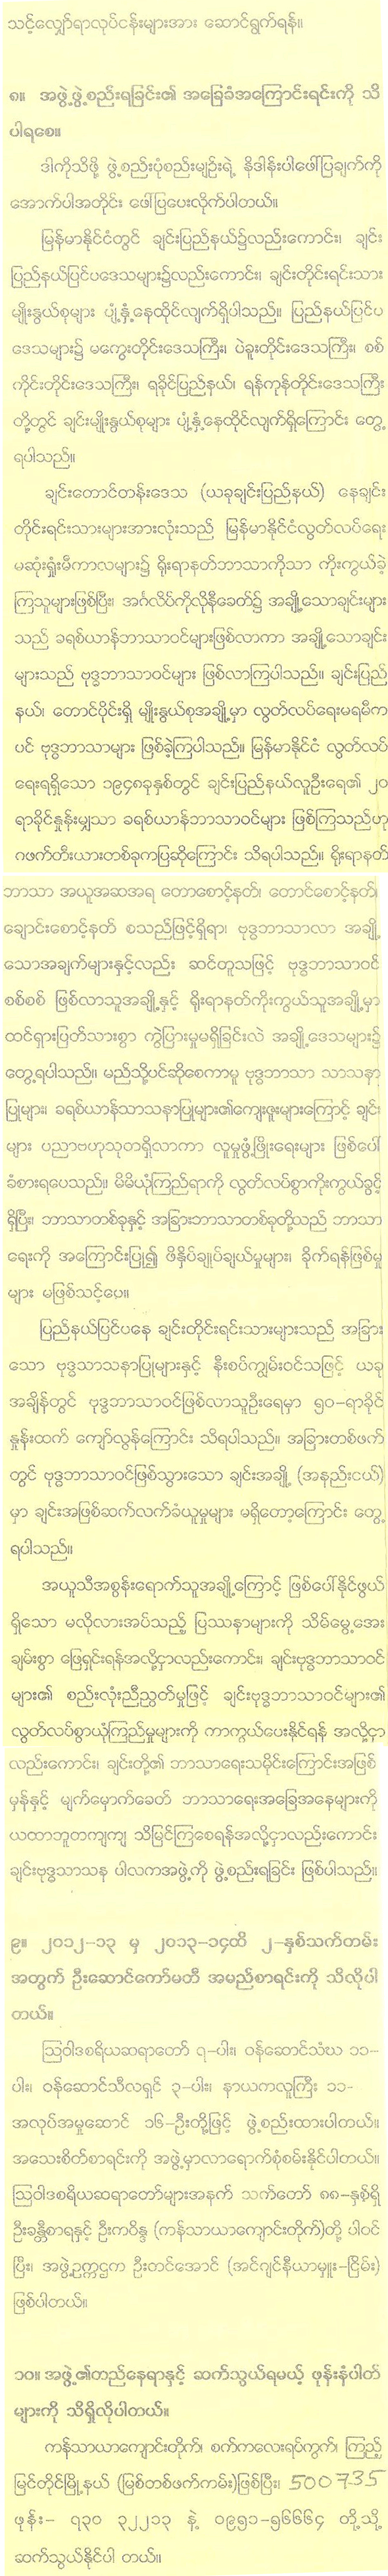 Chin Sasana Association (Kyeemyindaing - Yangon)